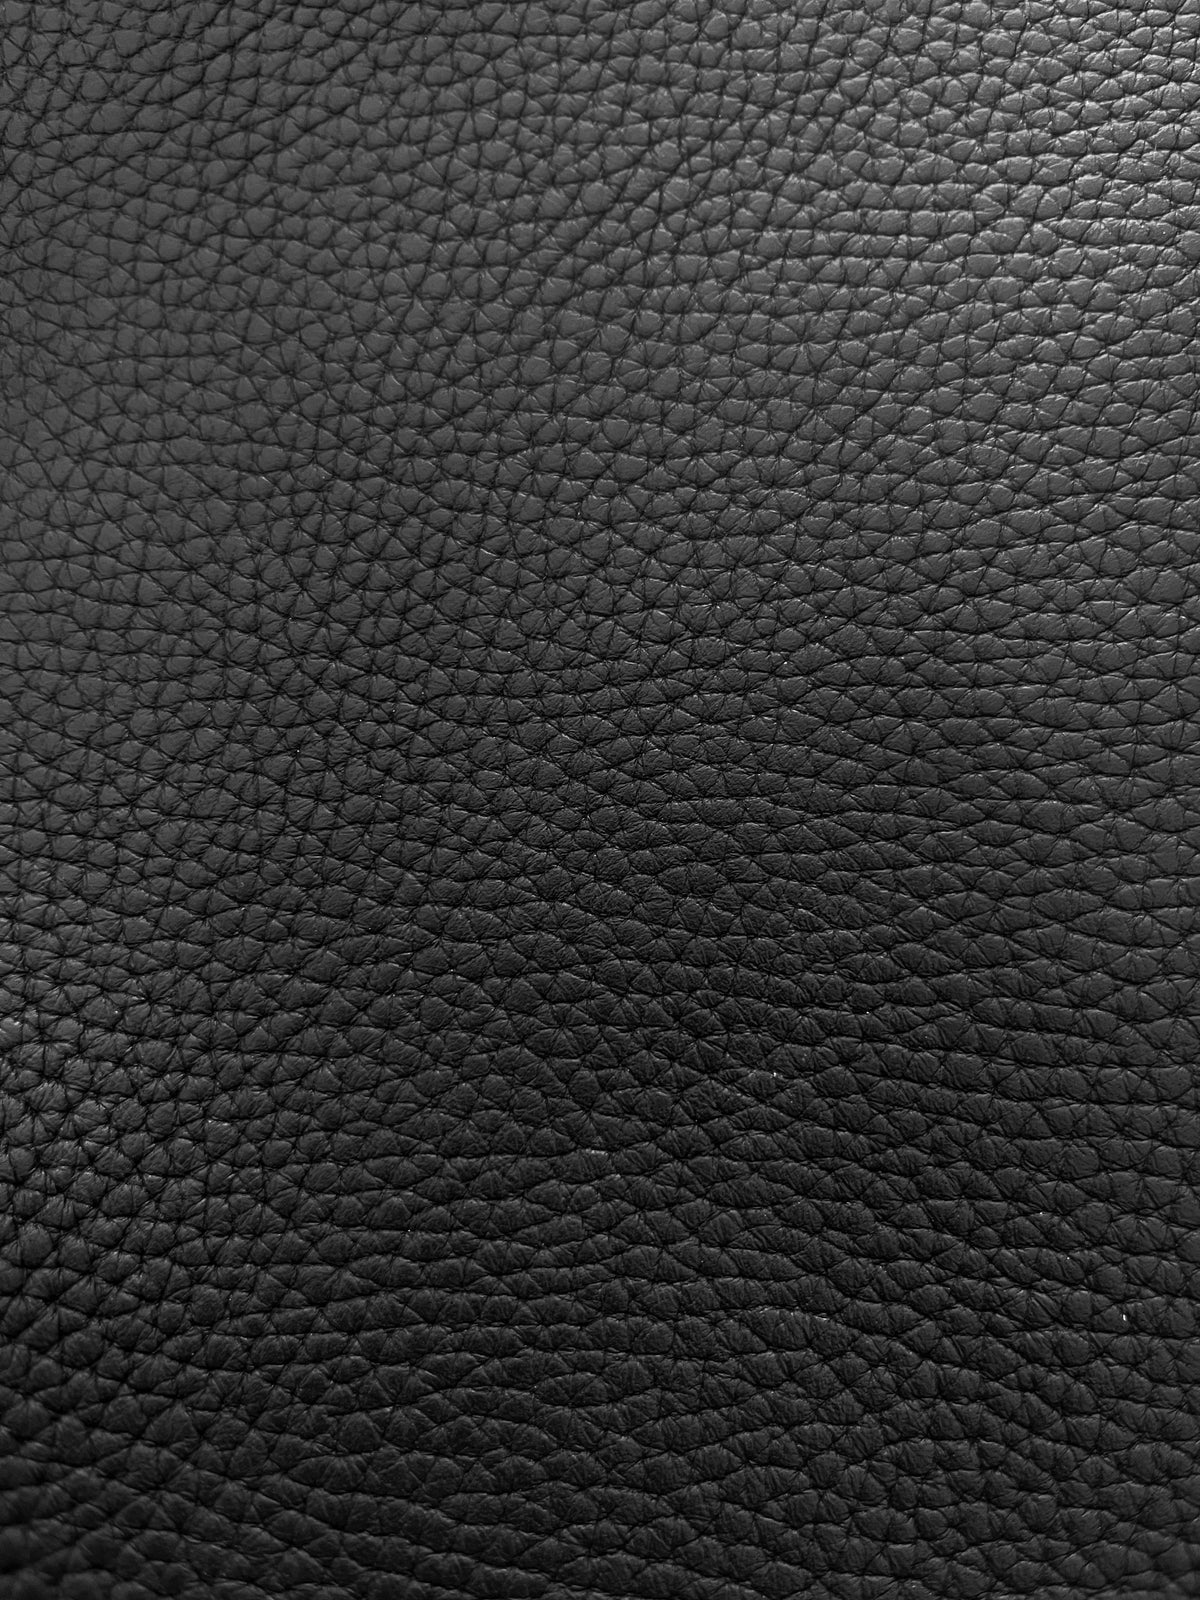 Michino Paris : Leather good brands by Yasu Michino.